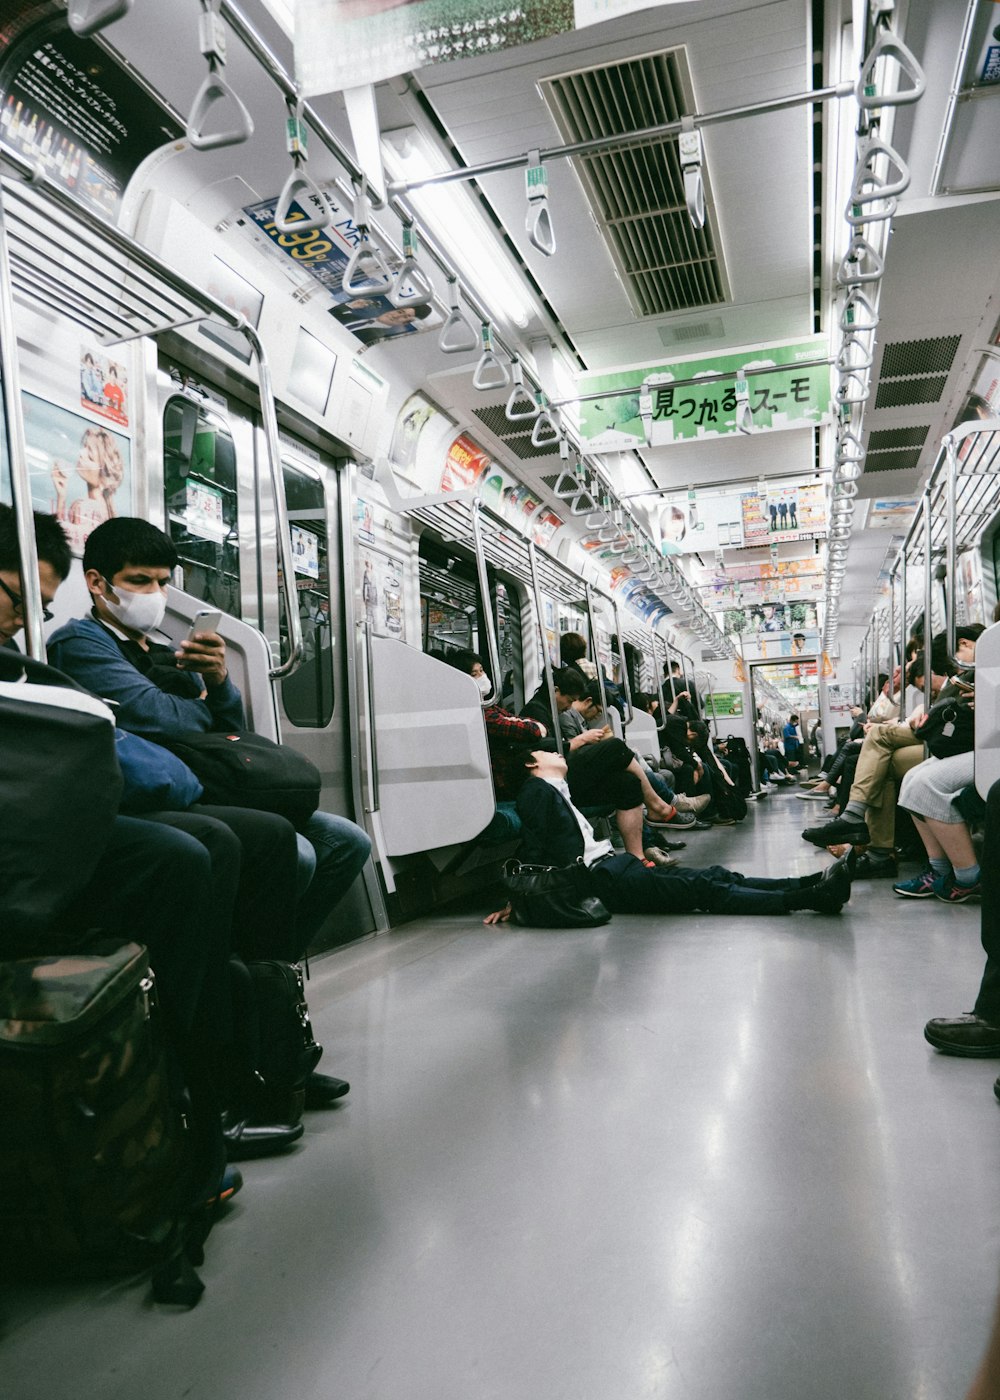 people sitting in train